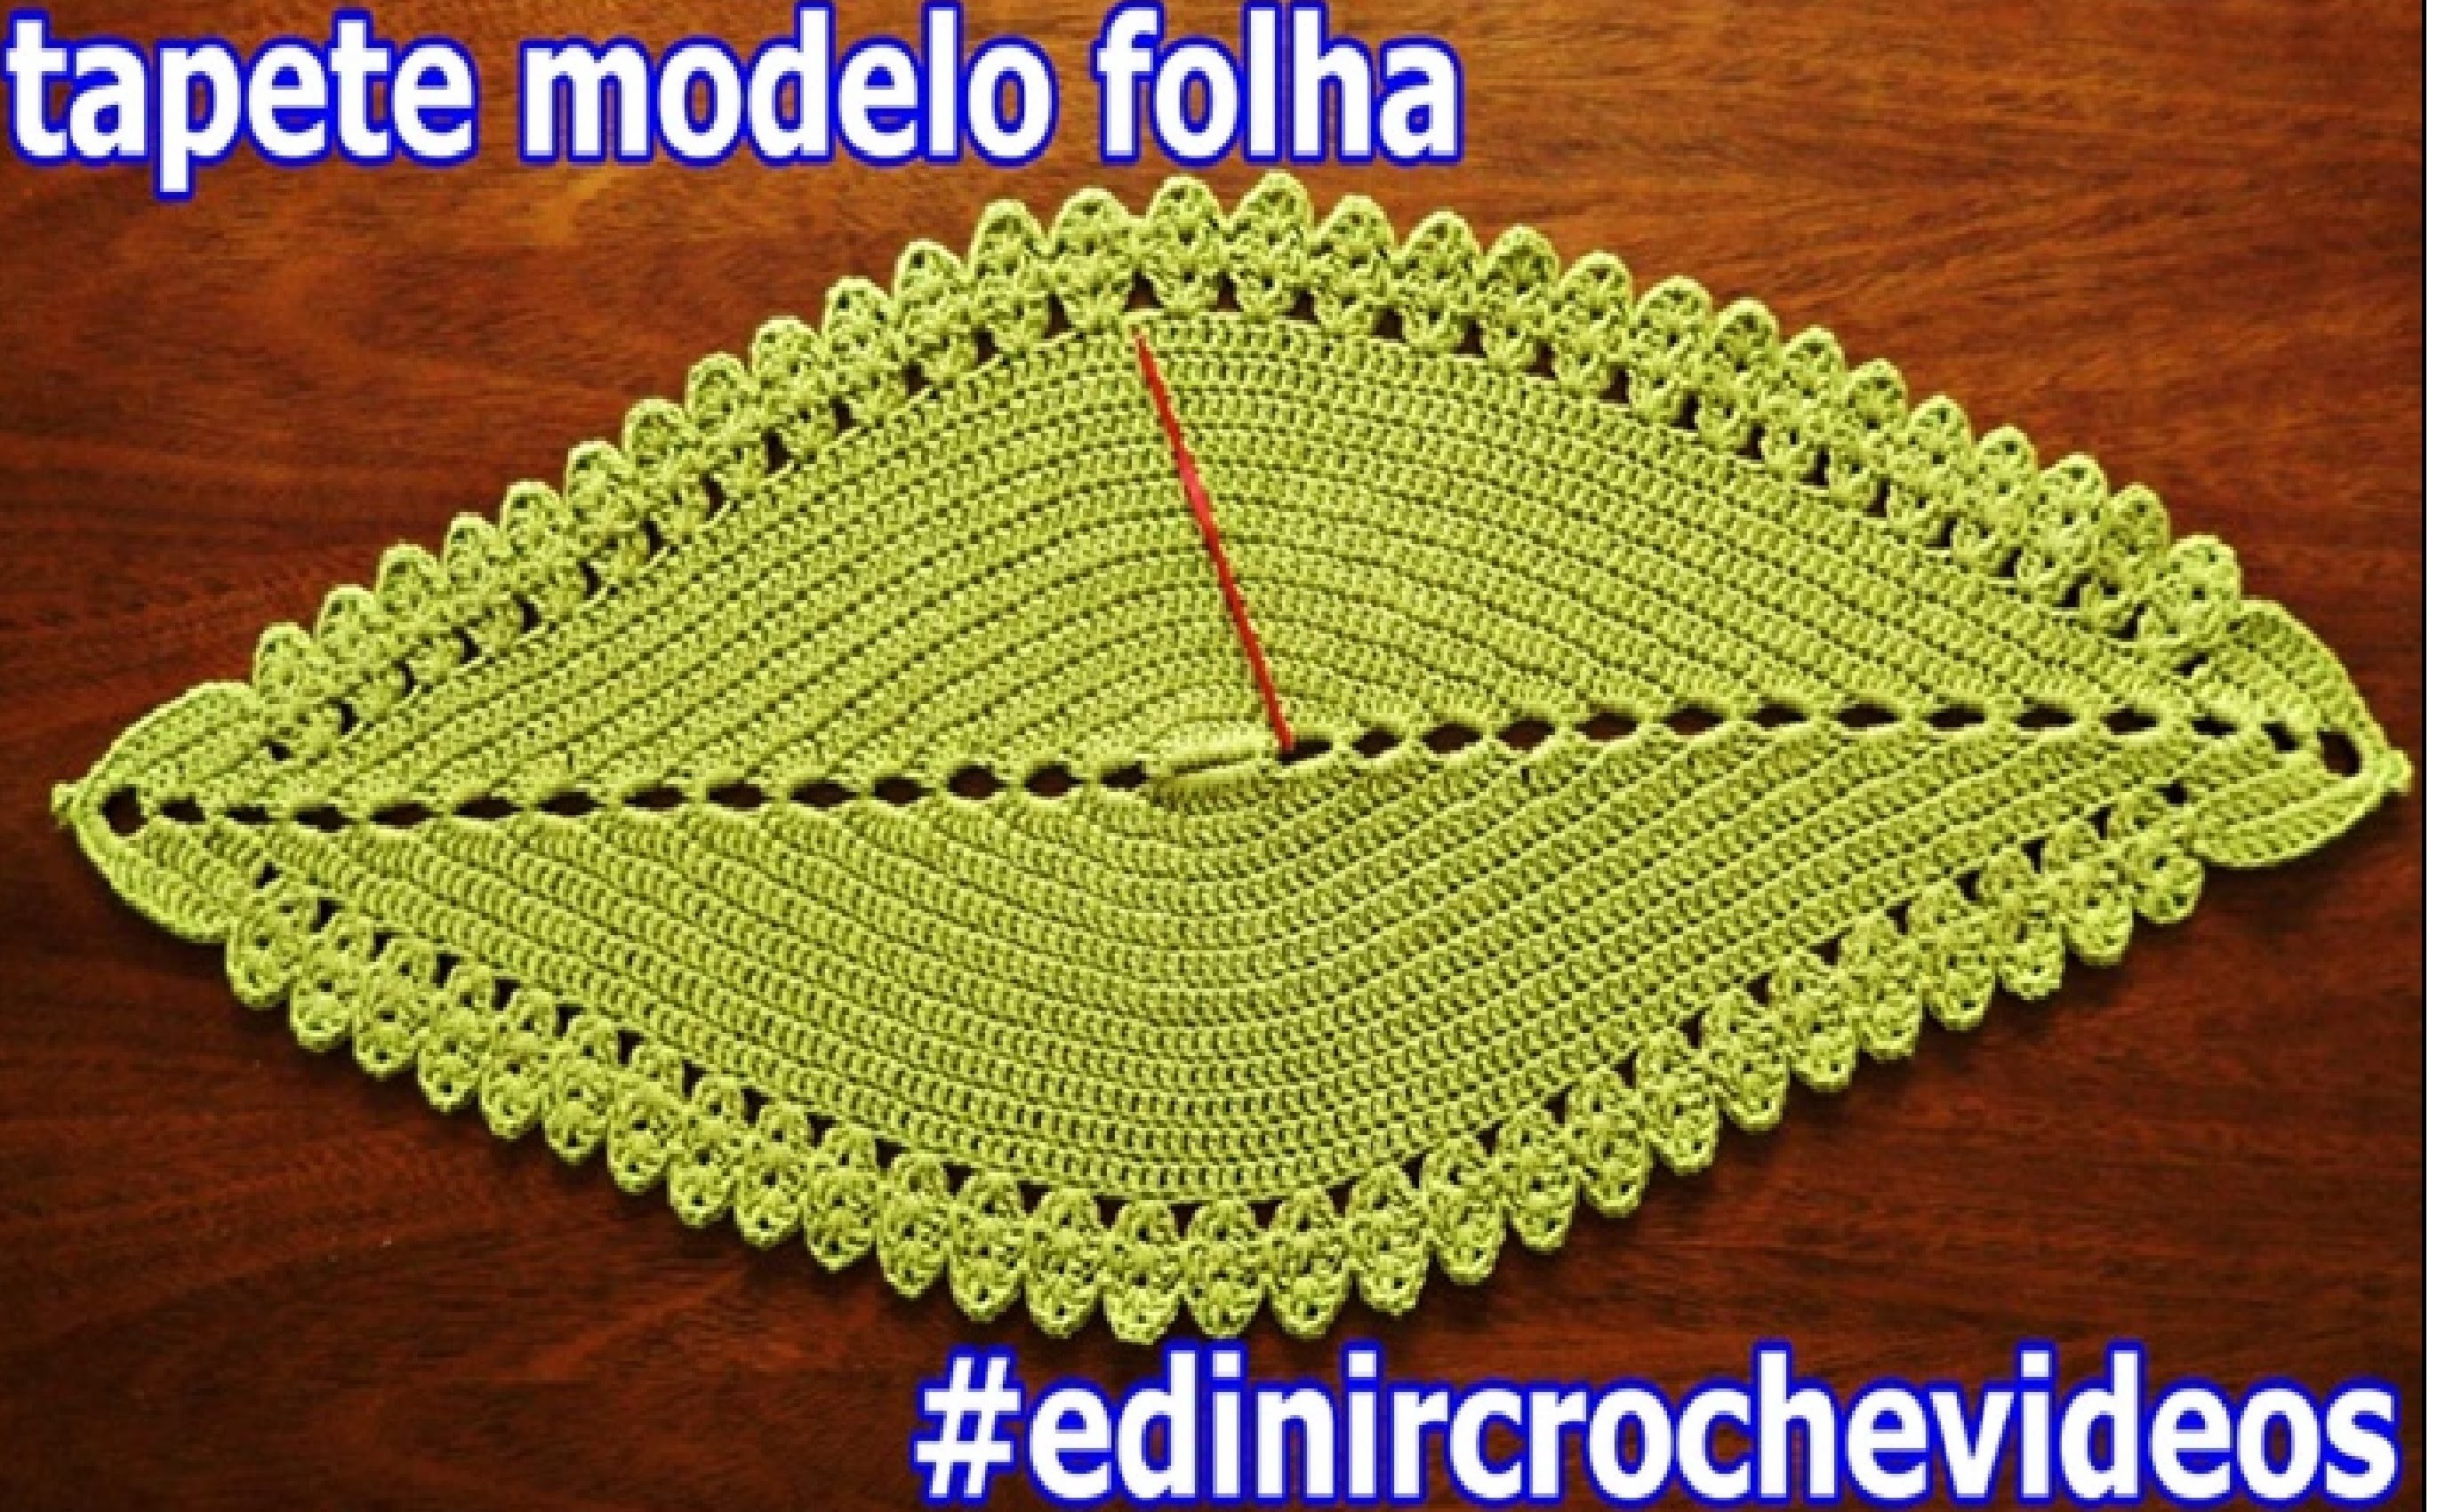 TAPETE DE CROCHE MODELO FOLHA - EDINIRCROCHEVIDEOS